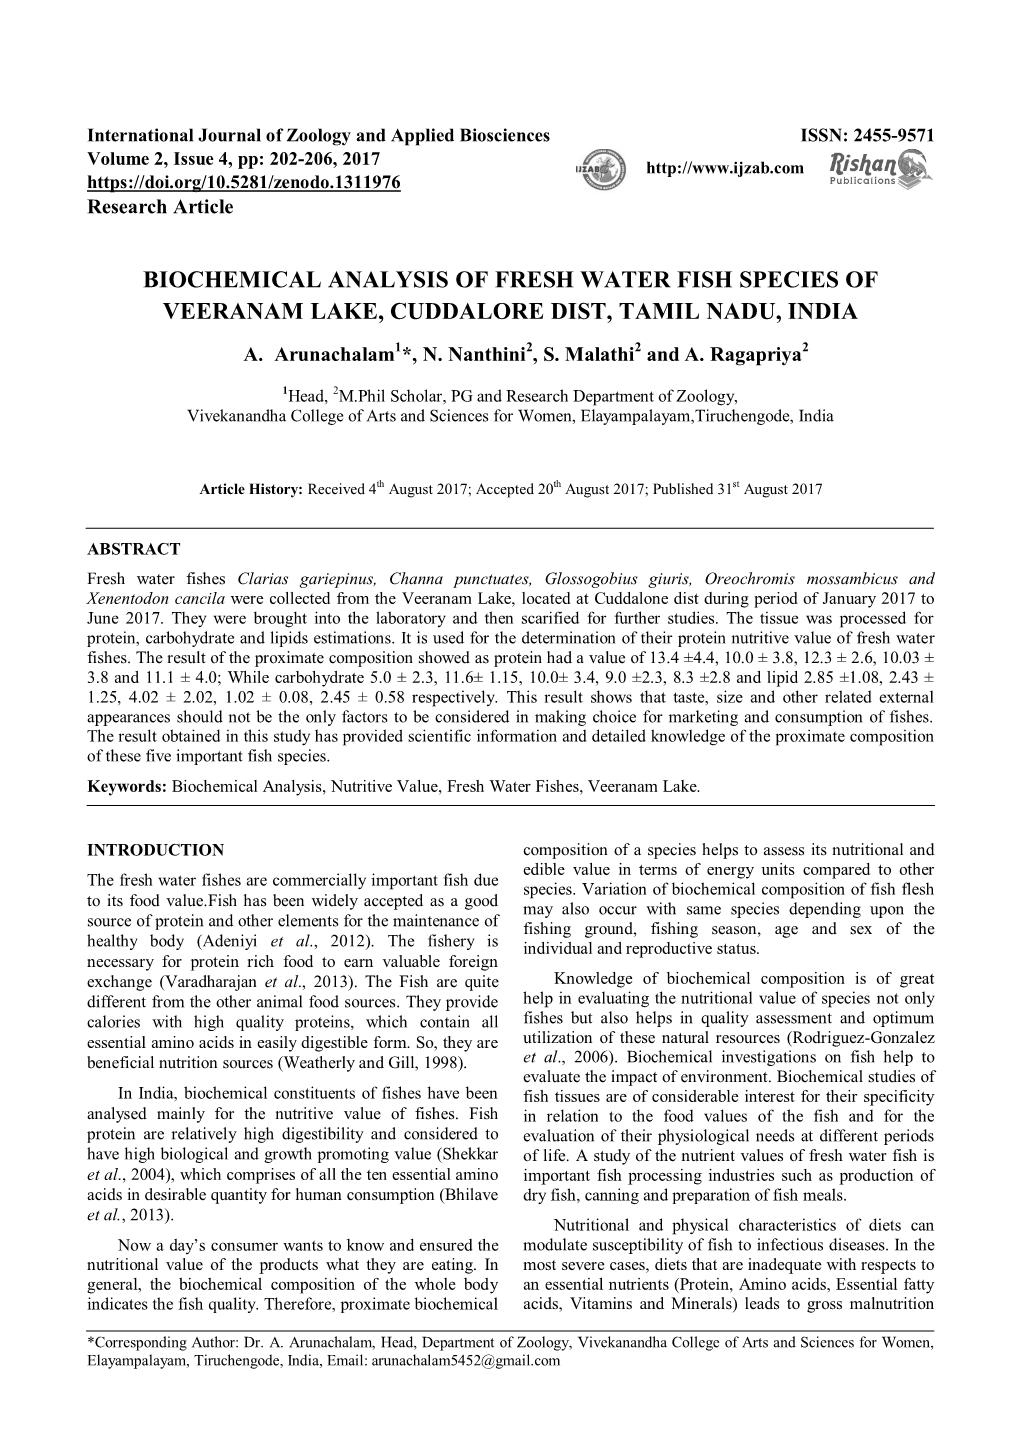 Biochemical Analysis of Fresh Water Fish Species of Veeranam Lake, Cuddalore Dist, Tamil Nadu, India